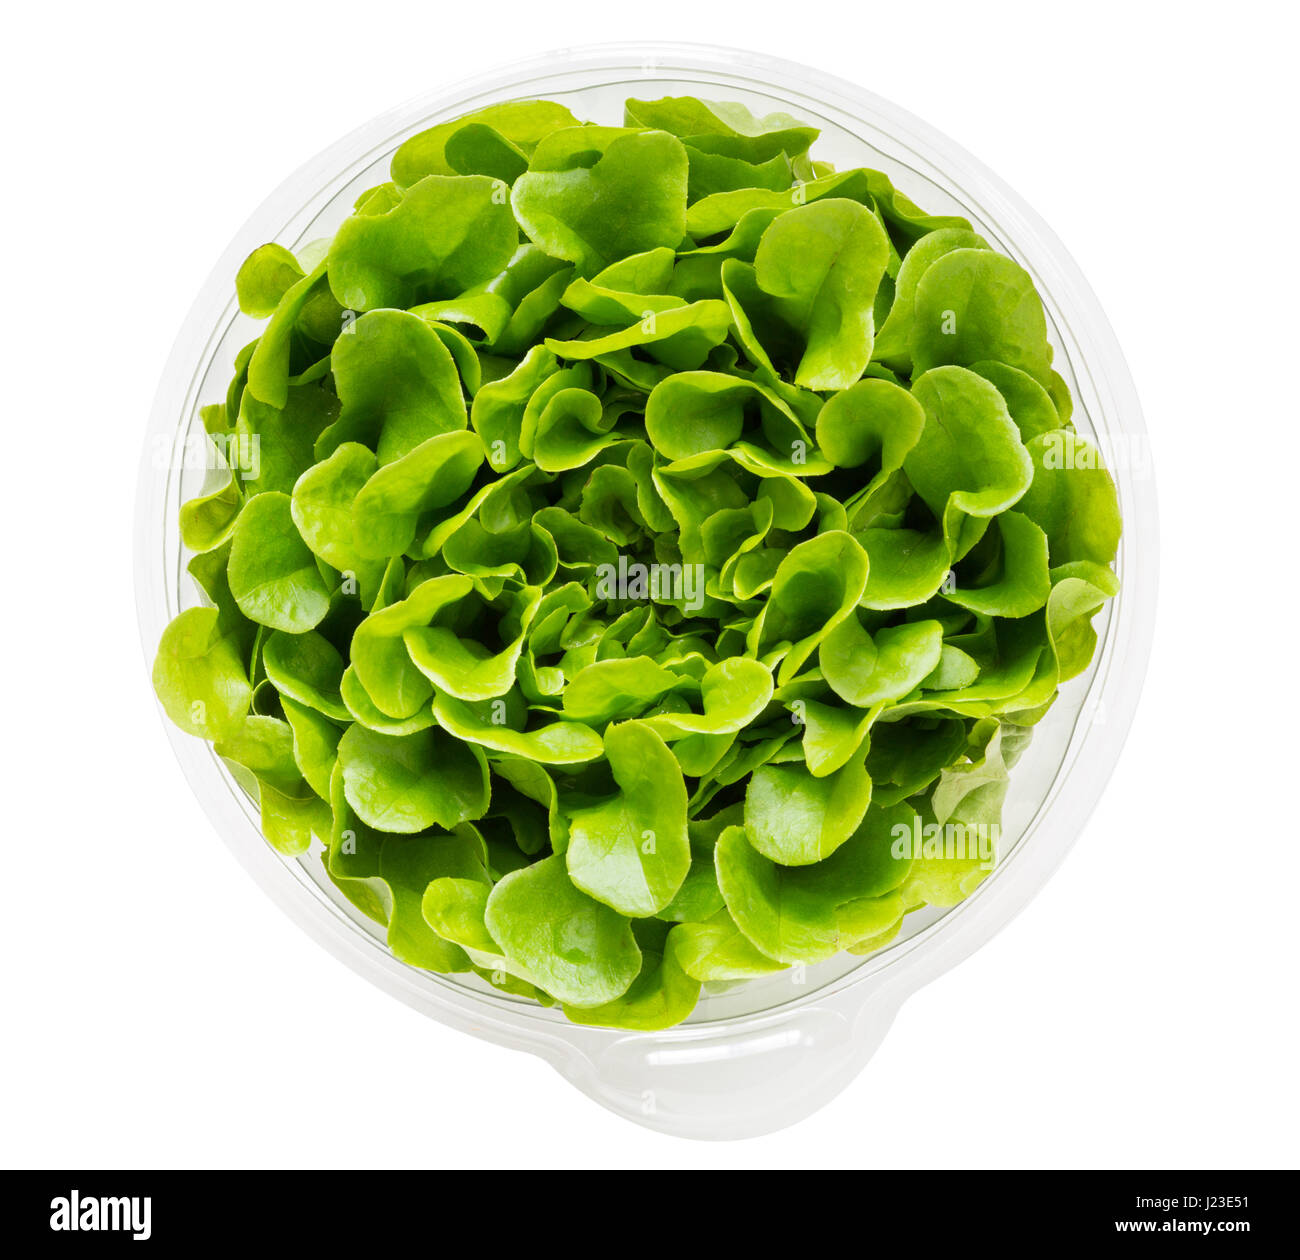 Salanova Salat wächst im Plastiktopf erlauben individuelle verlässt abgeholt werden Stockfoto